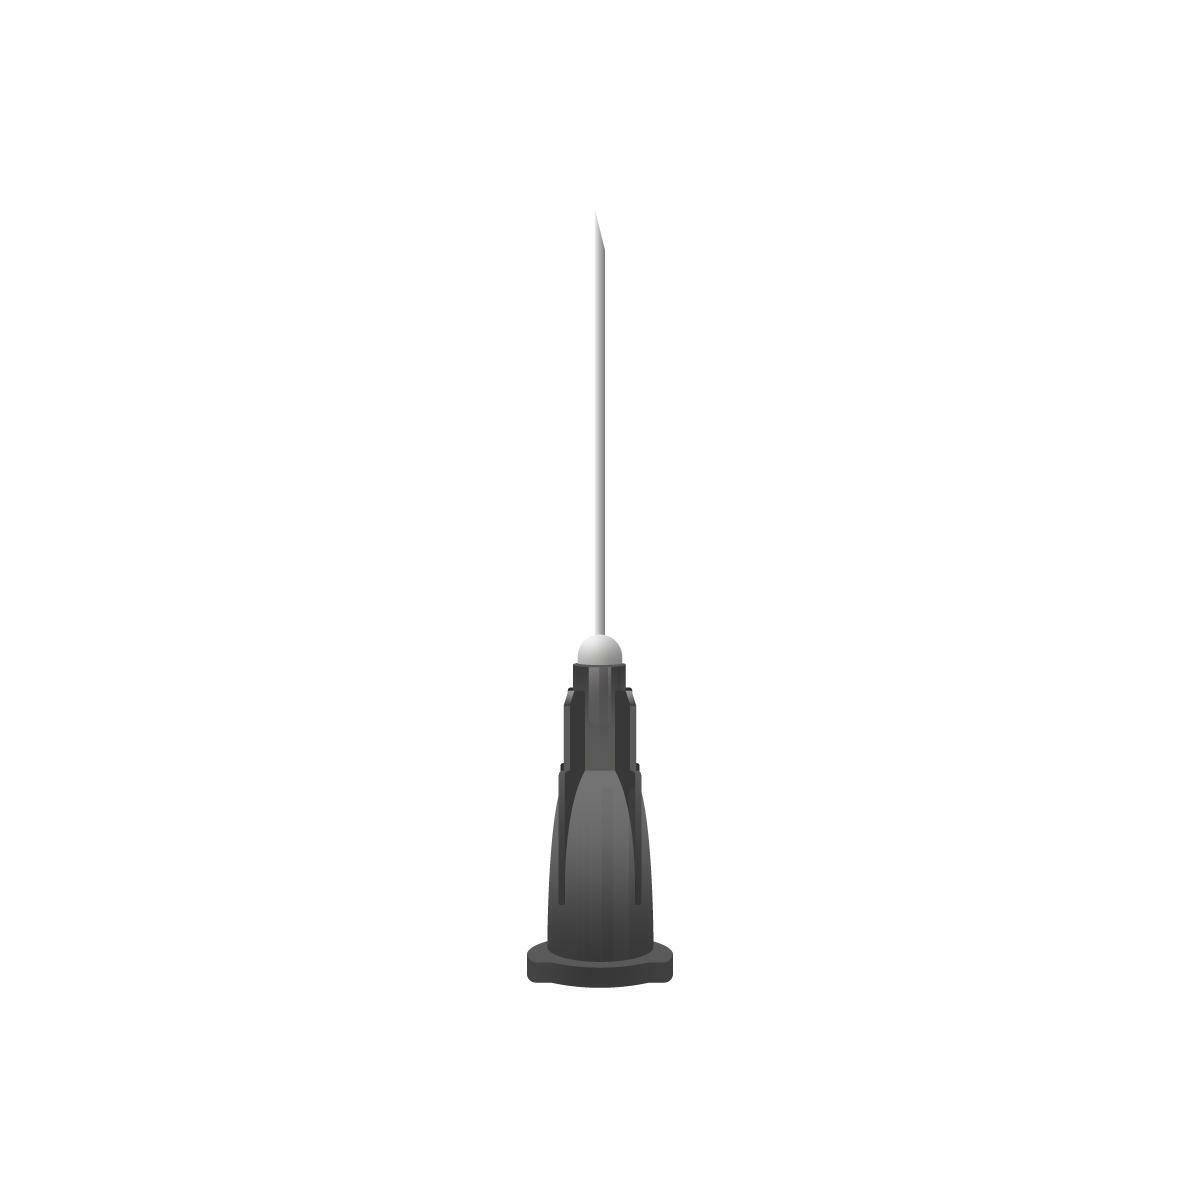 22g Black 1 inch BD Microlance Needles (25mm x 0.7mm) - UKMEDI